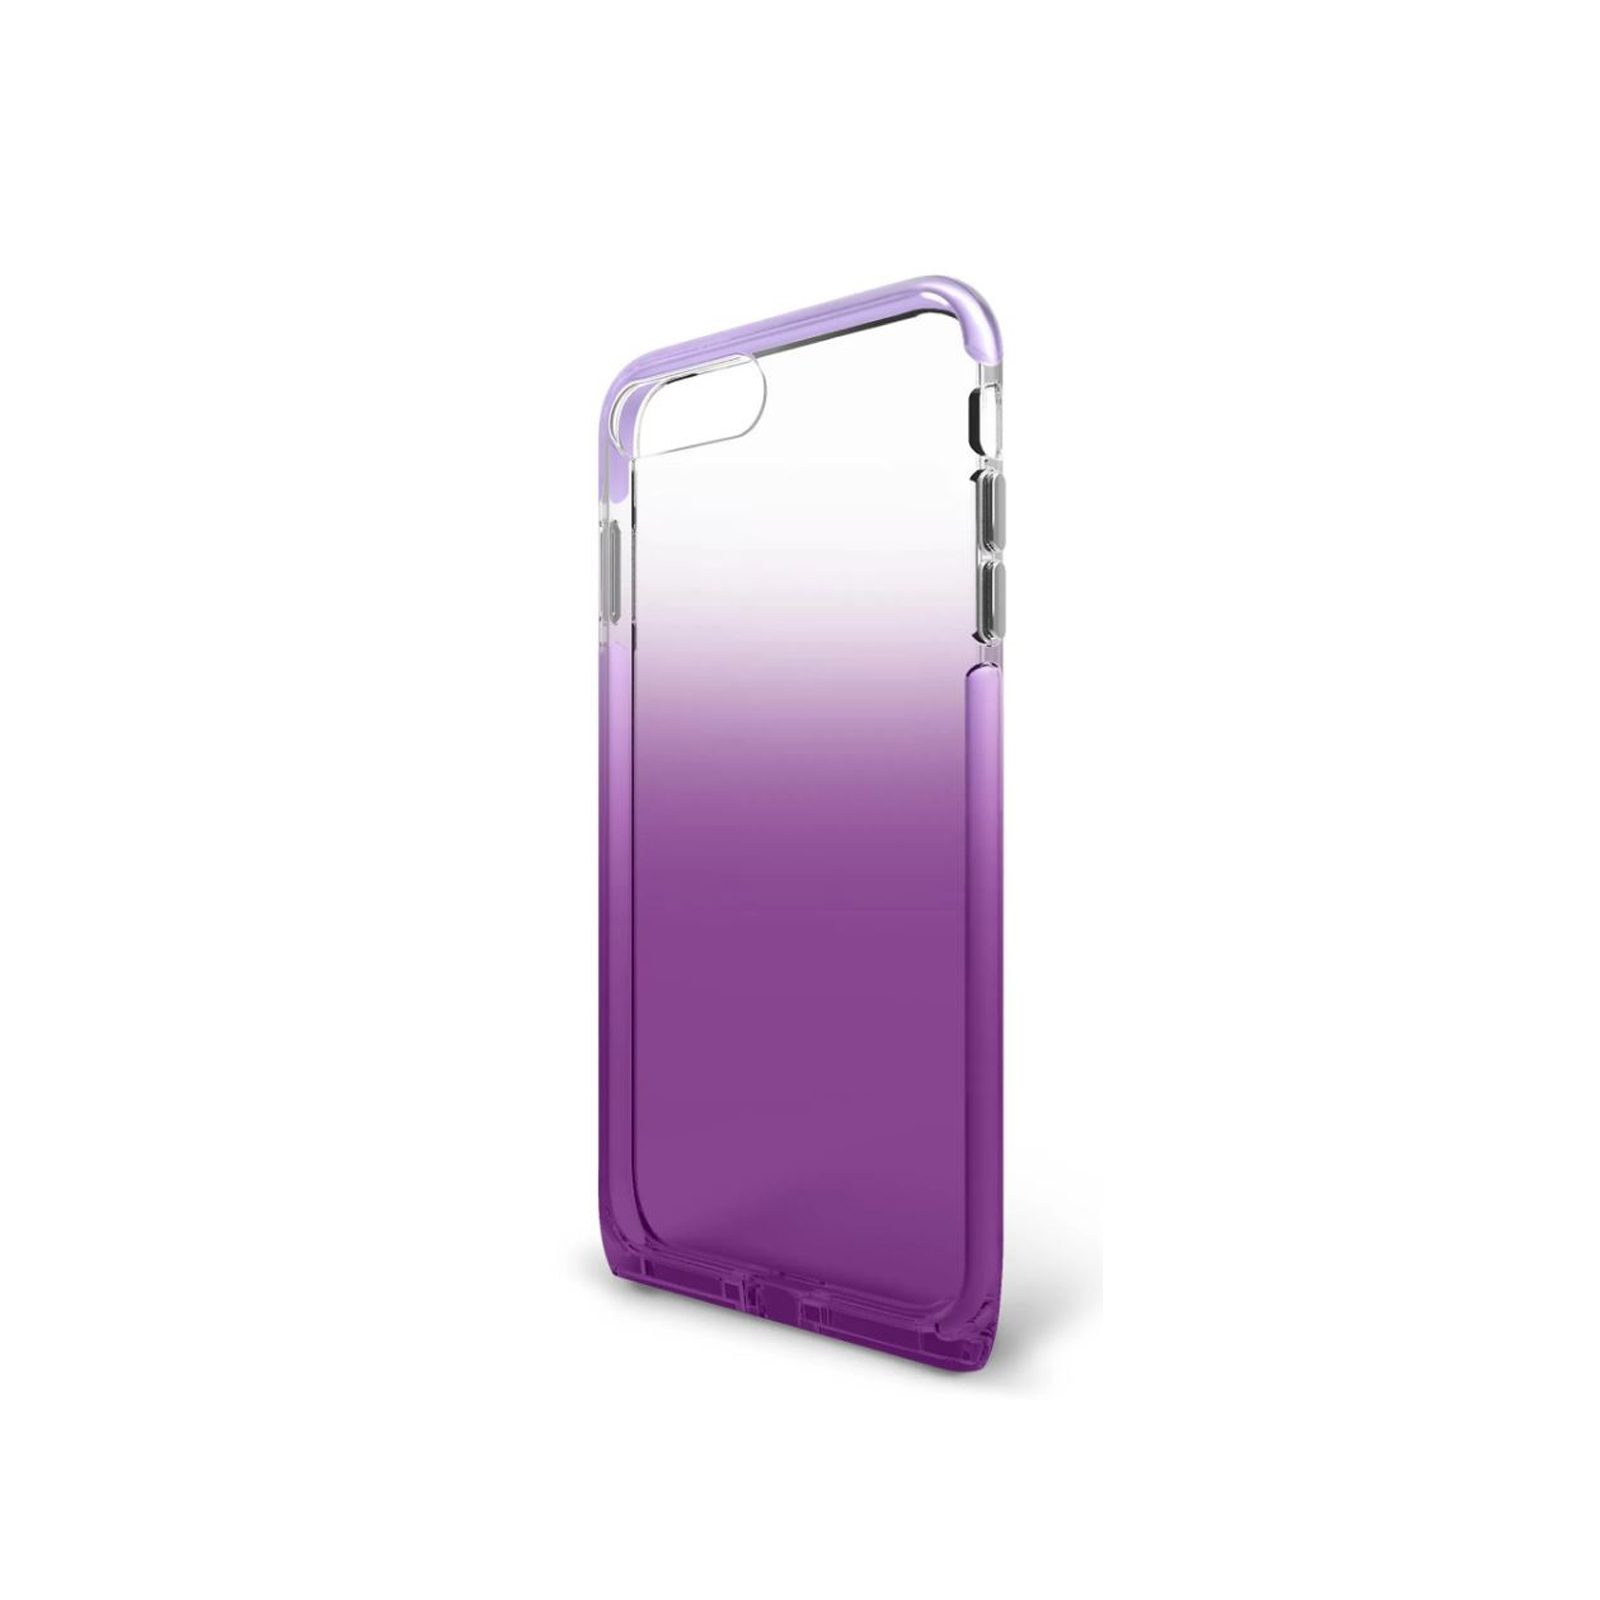 Harmony iPhone 6 Plus / 7 Plus / 8 Plus Clear / Purple Case Brand New